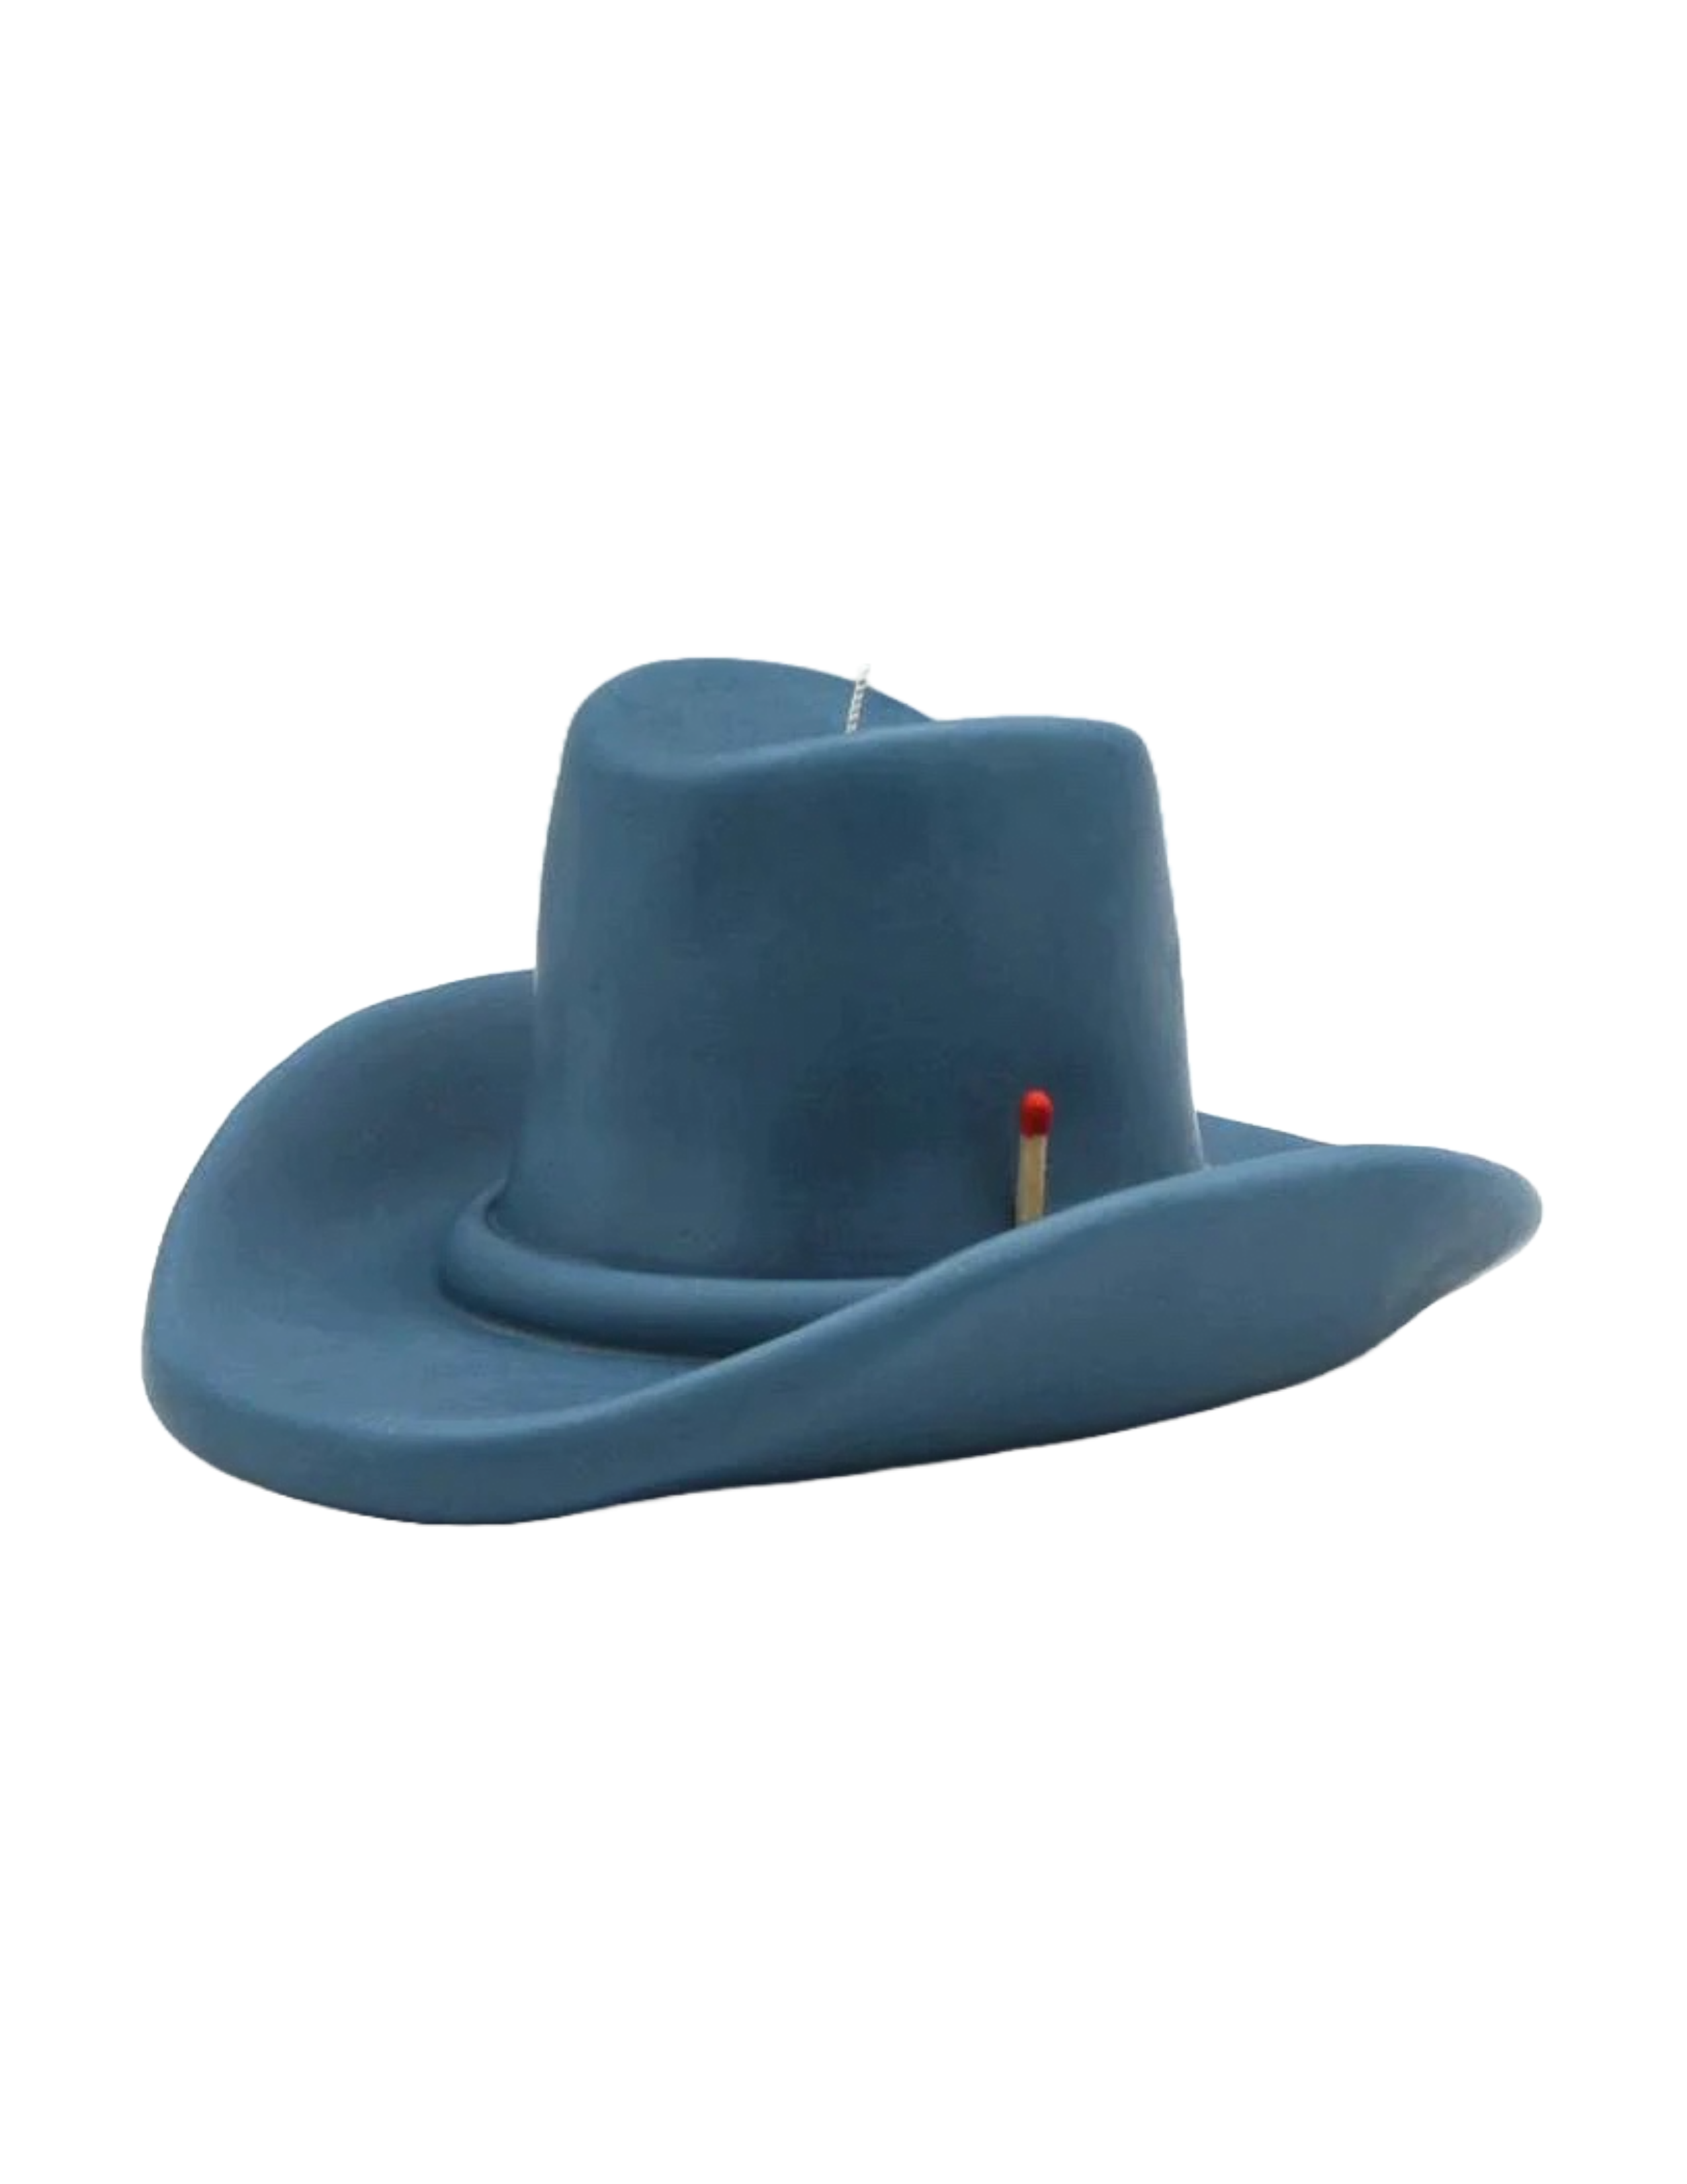 Belle Star Cowboy Hat Candle - Denim